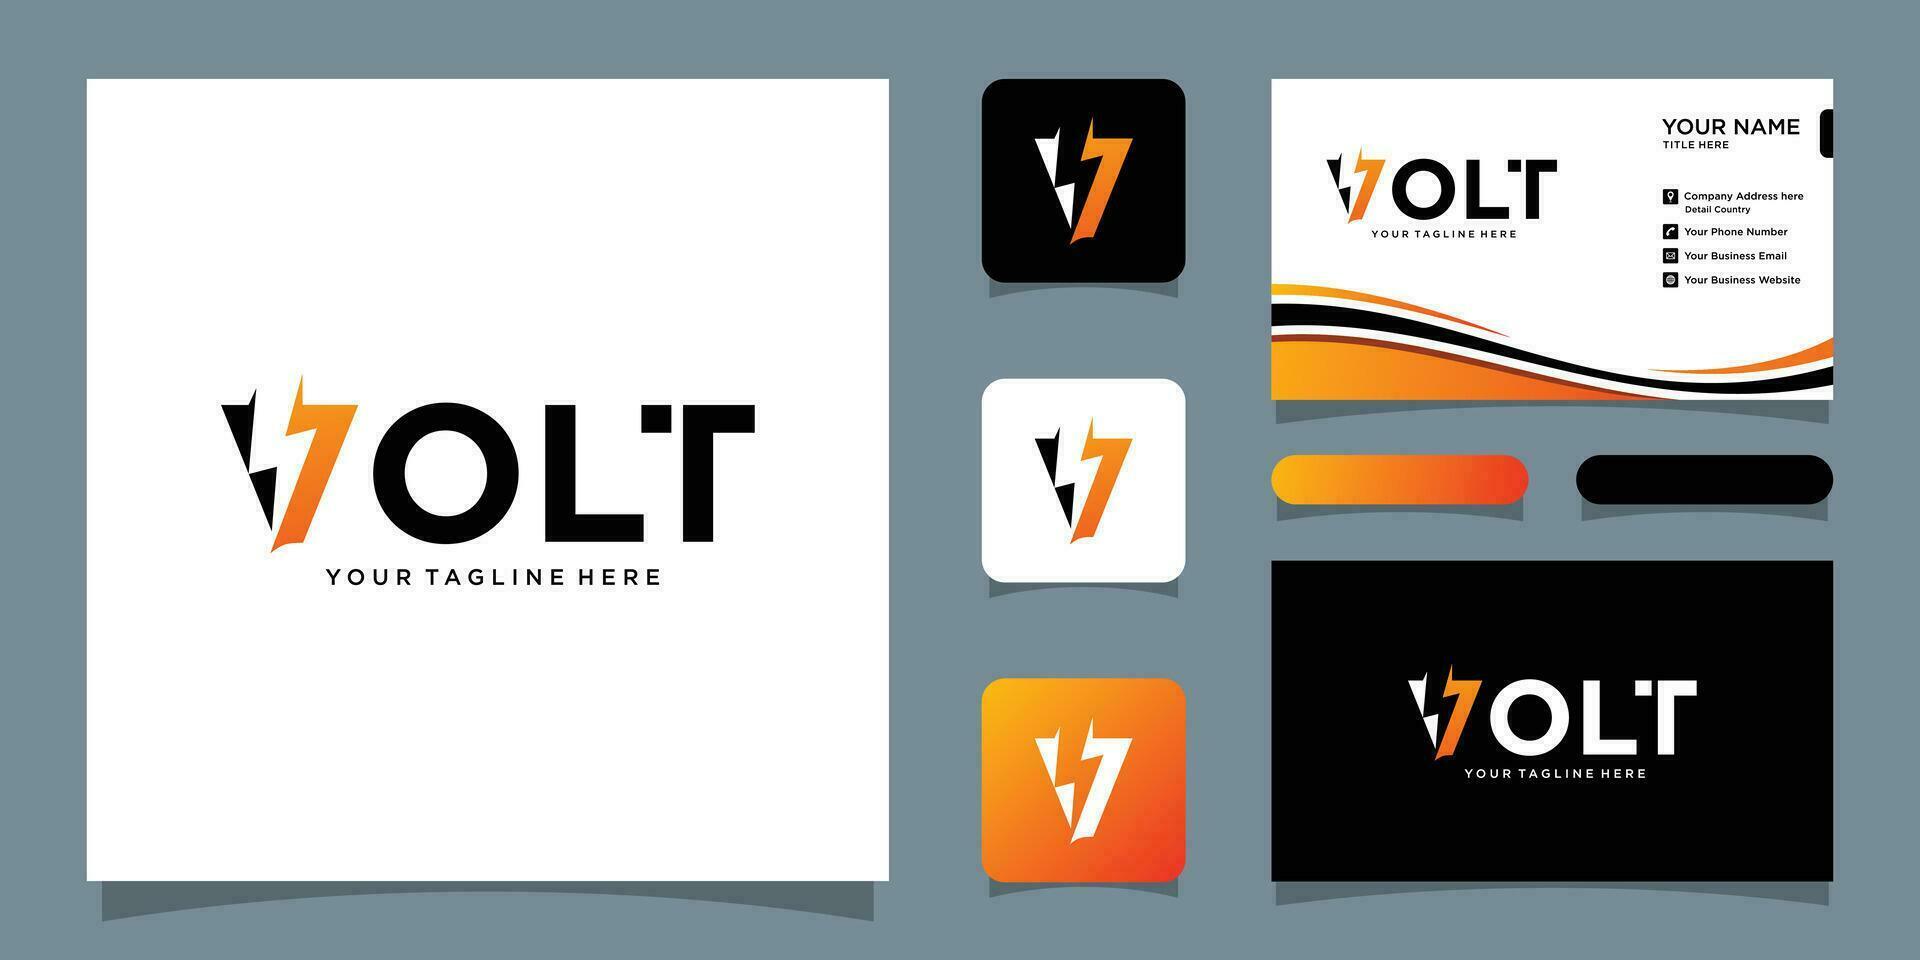 Volt power logo design with business card design vector